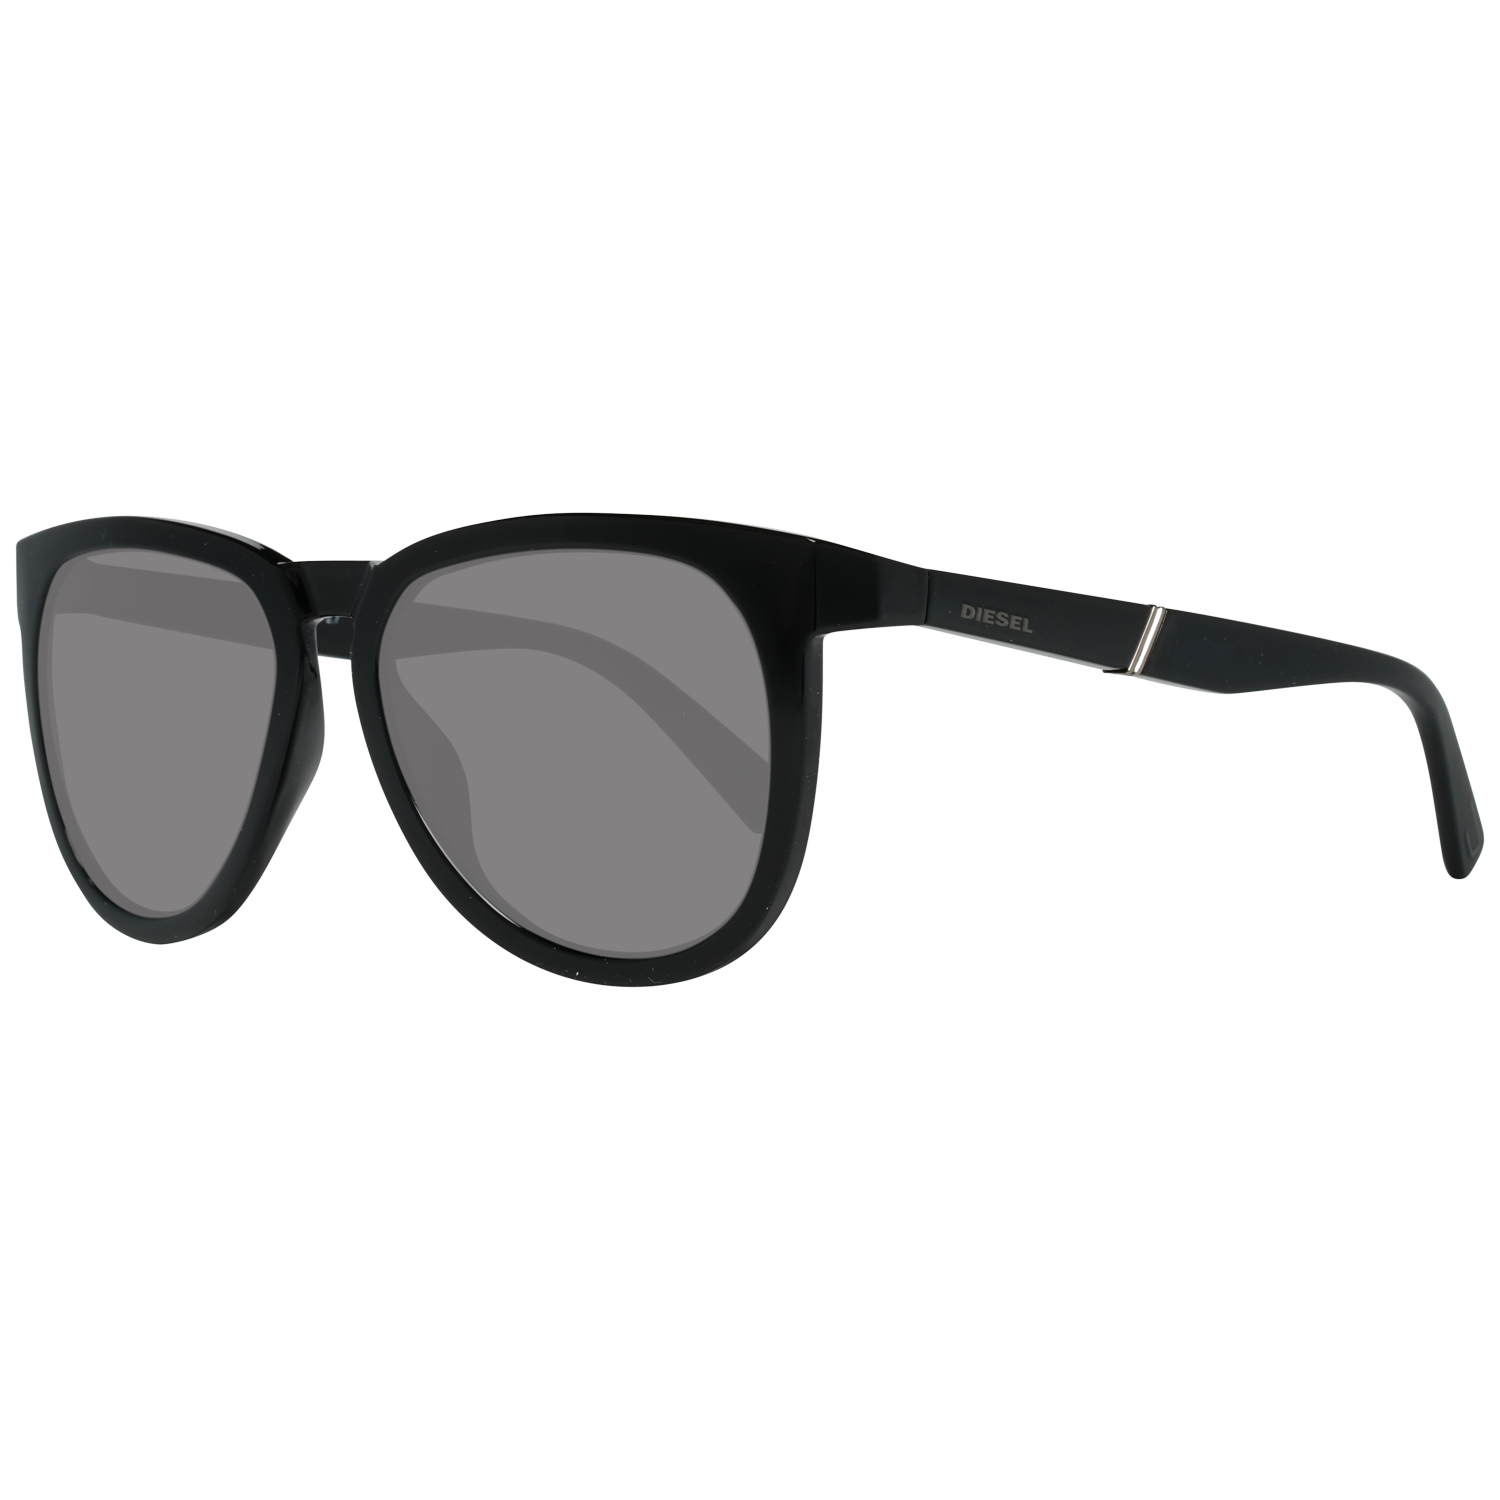 Diesel Sunglasses DL0263 01A 54